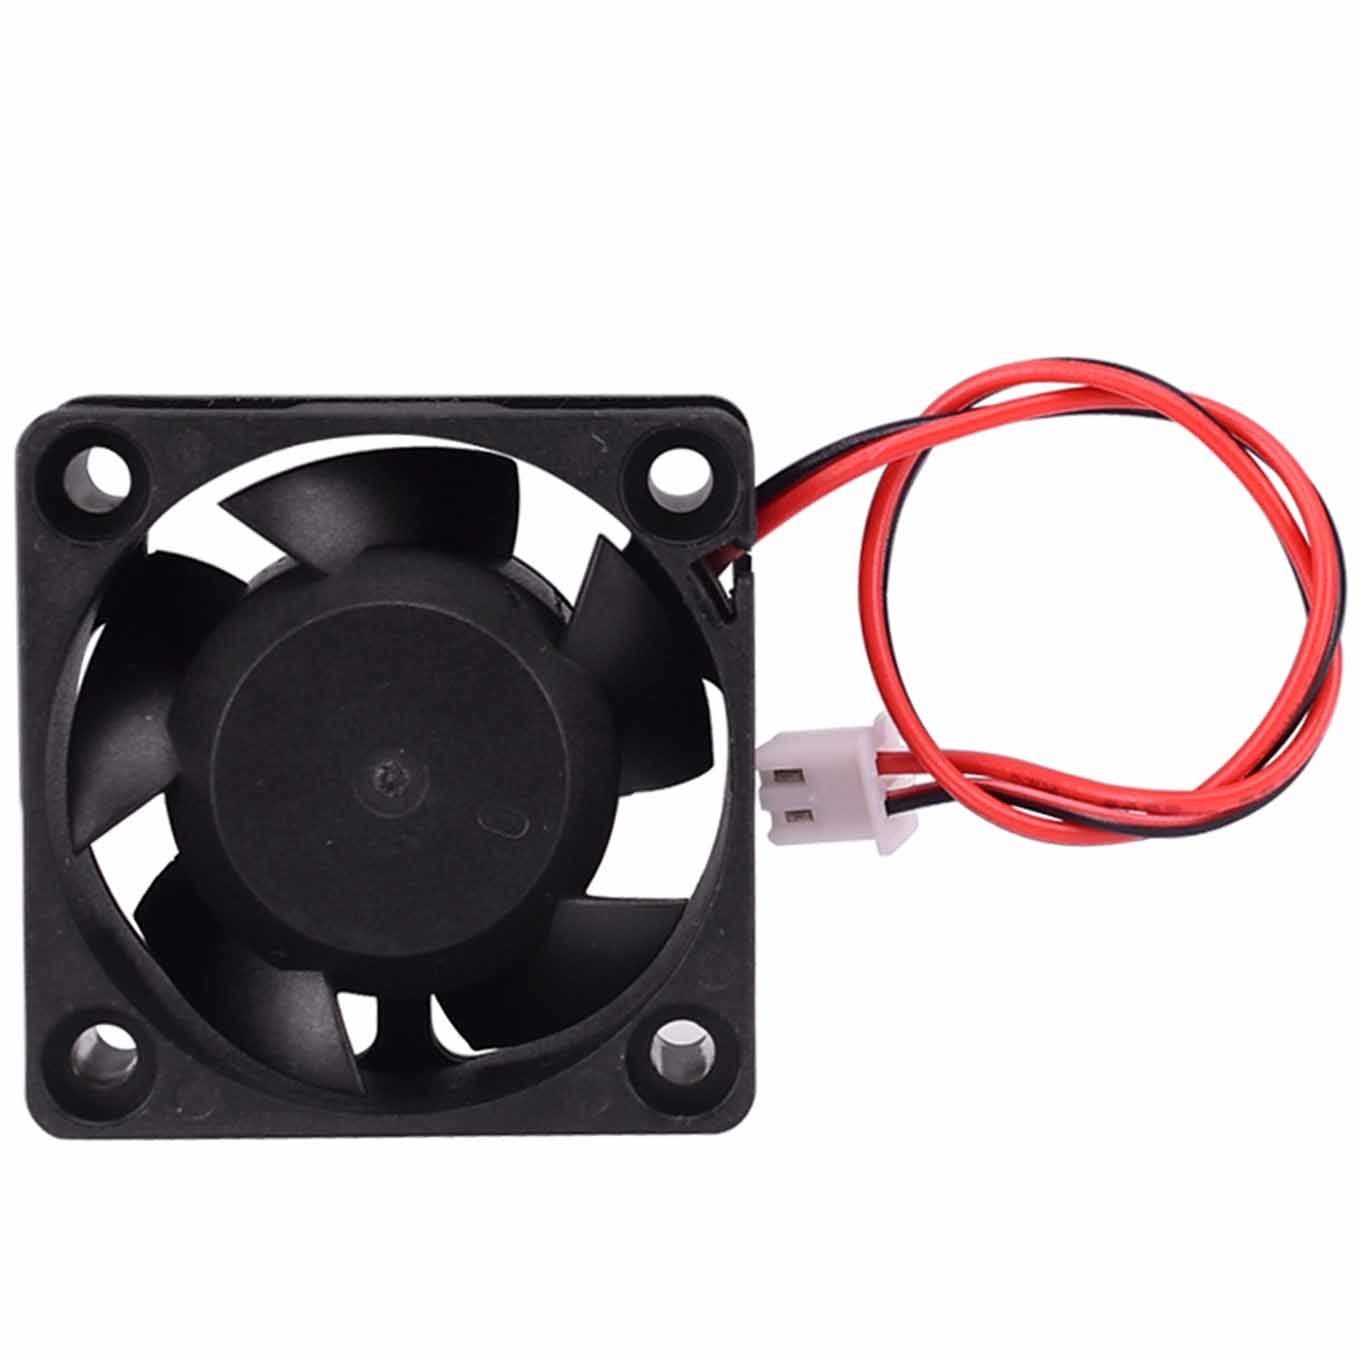  Black Plastic 60x60x10mm 6010 24V Cooling Fan 3D Printer Part Manufactures